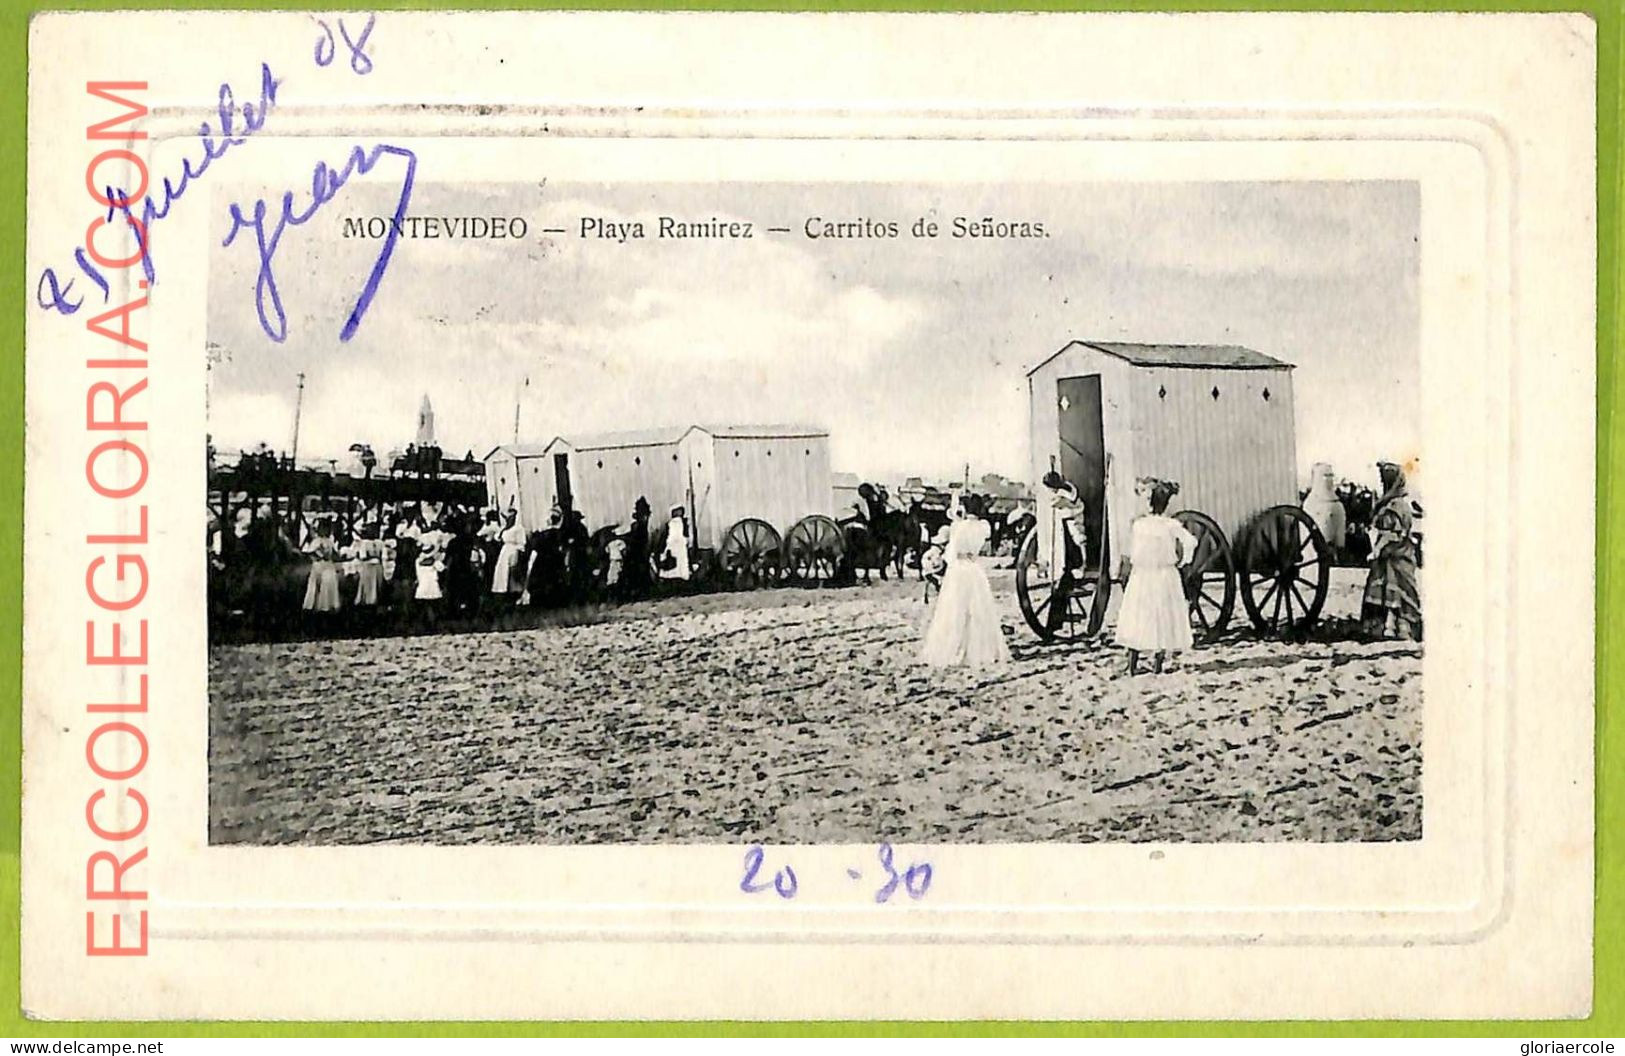 Af2730 - URUGUAY - VINTAGE POSTCARD - MONTEVIDEO - Playa Ramirez - 1908 - Uruguay